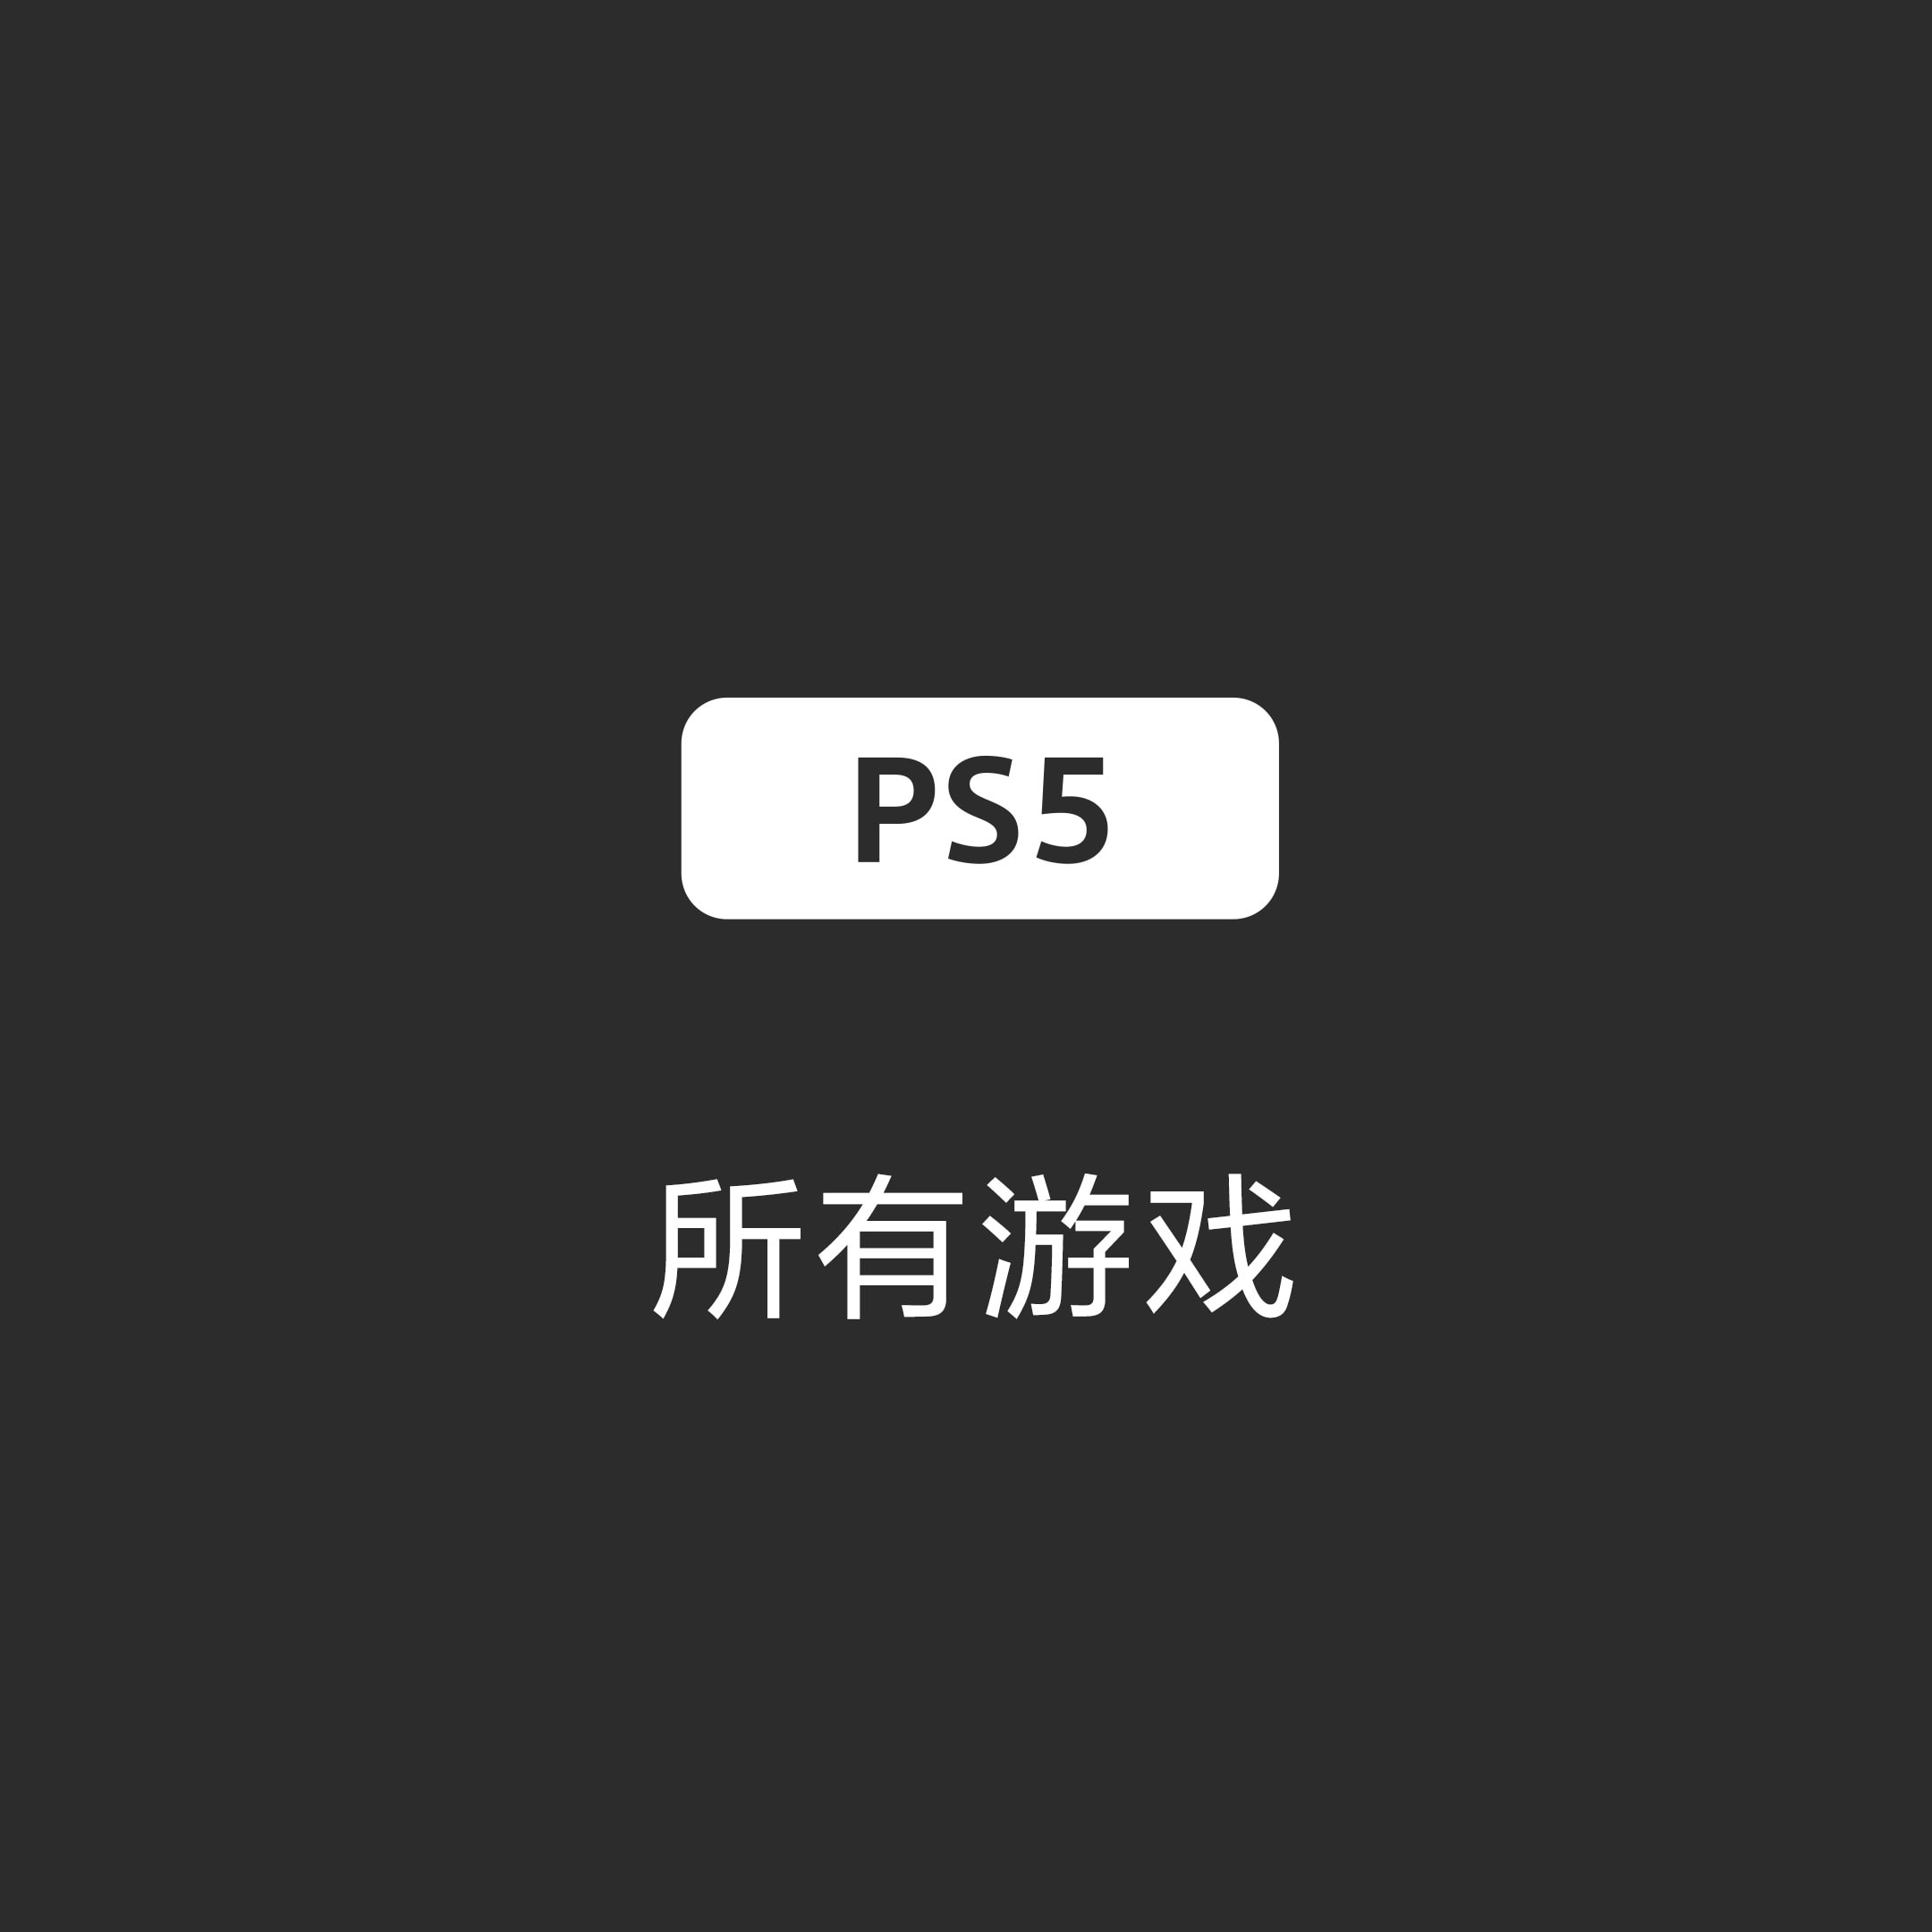 CN - PS5 Games - Quick Link